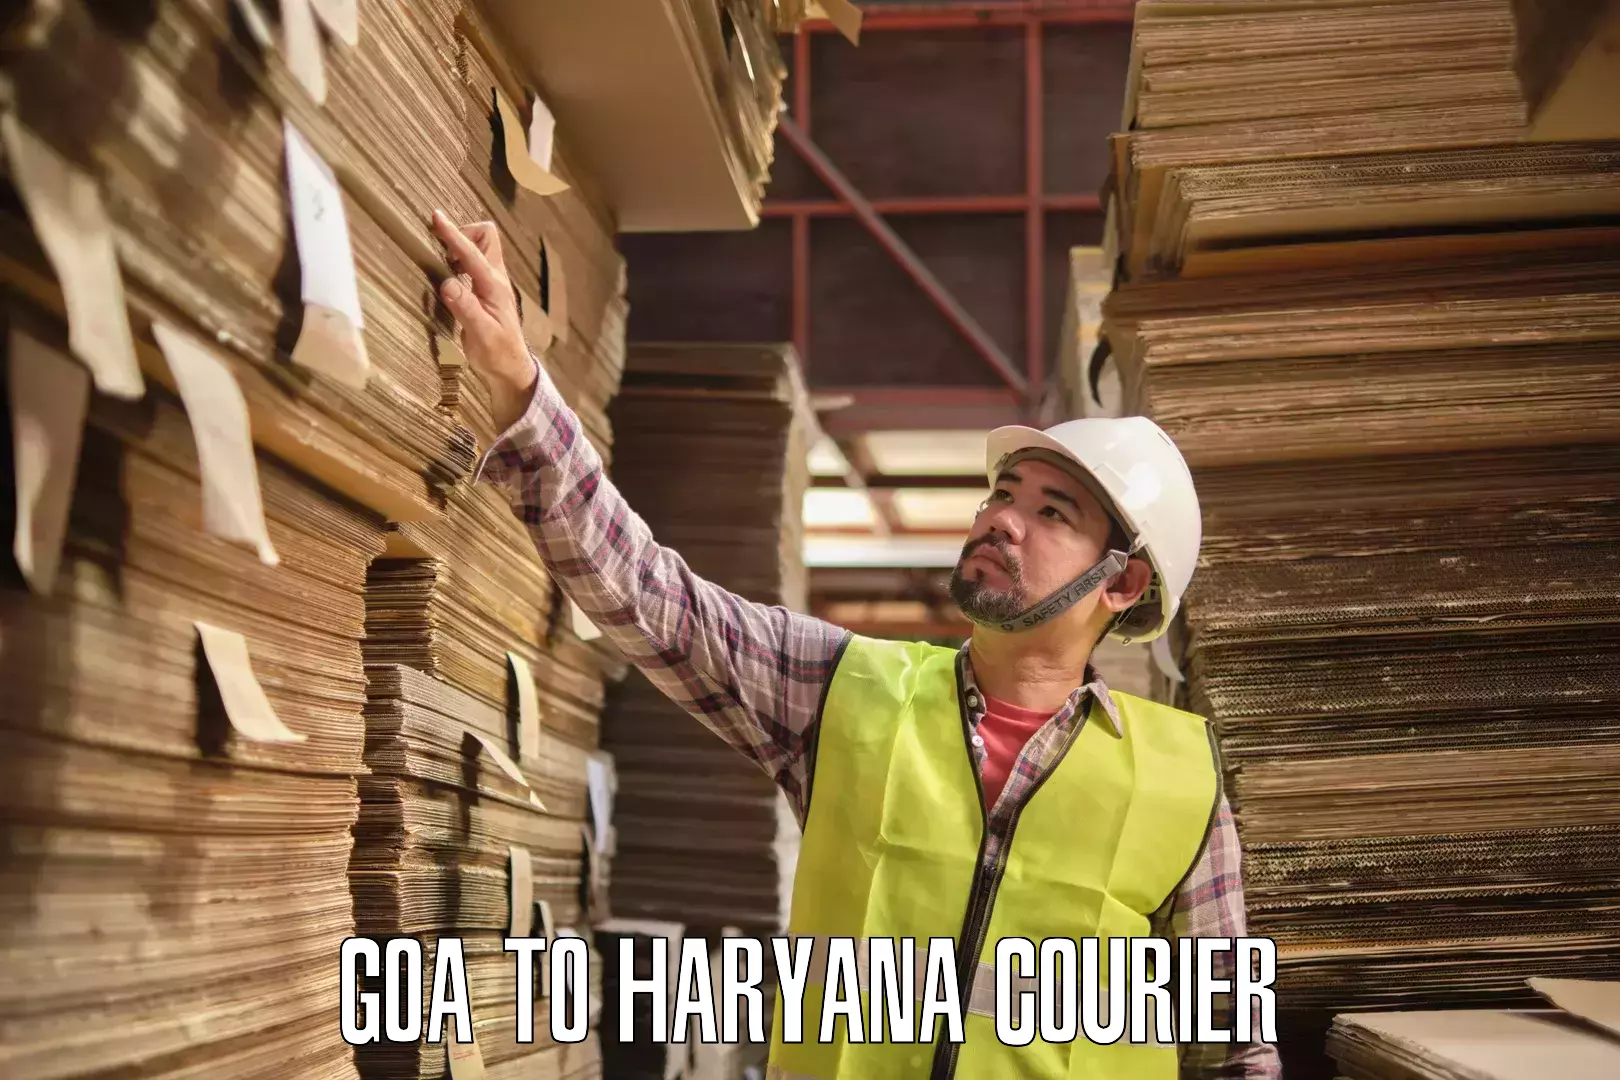 Professional courier handling Goa to Pehowa